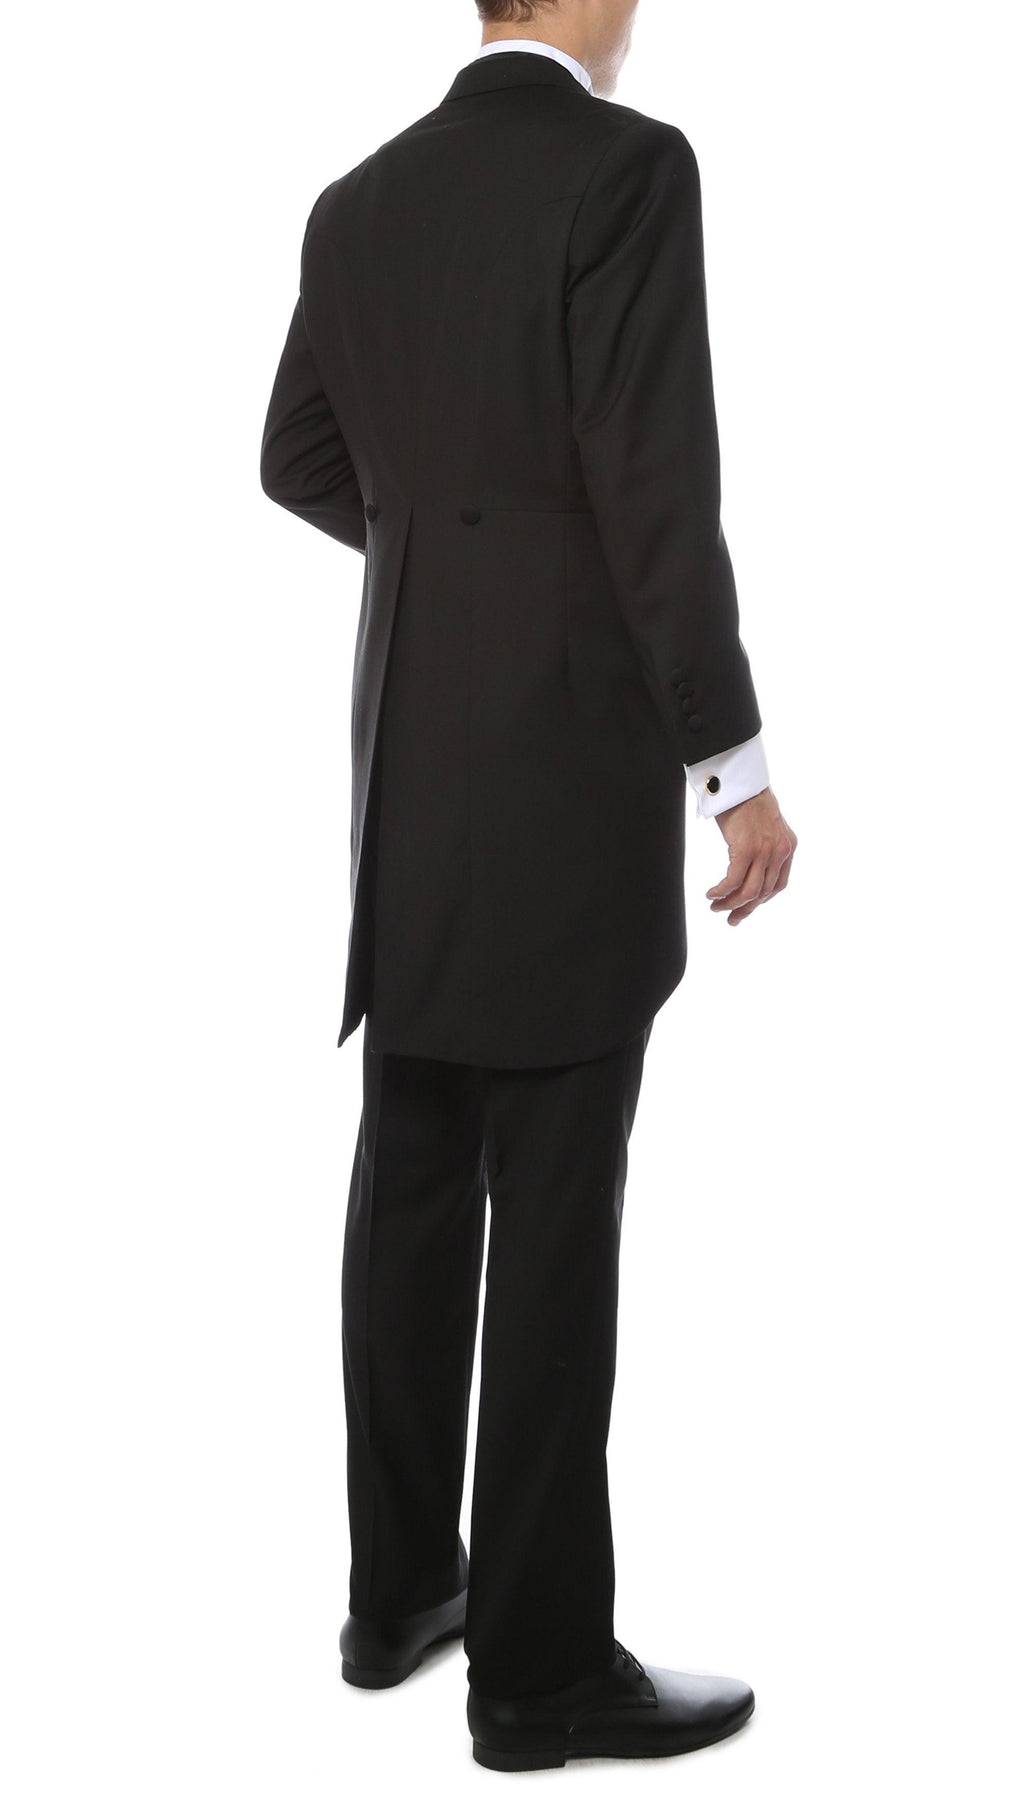 Mens Black Cutaway Regular Fit 2 Piece Tuxedo Suit